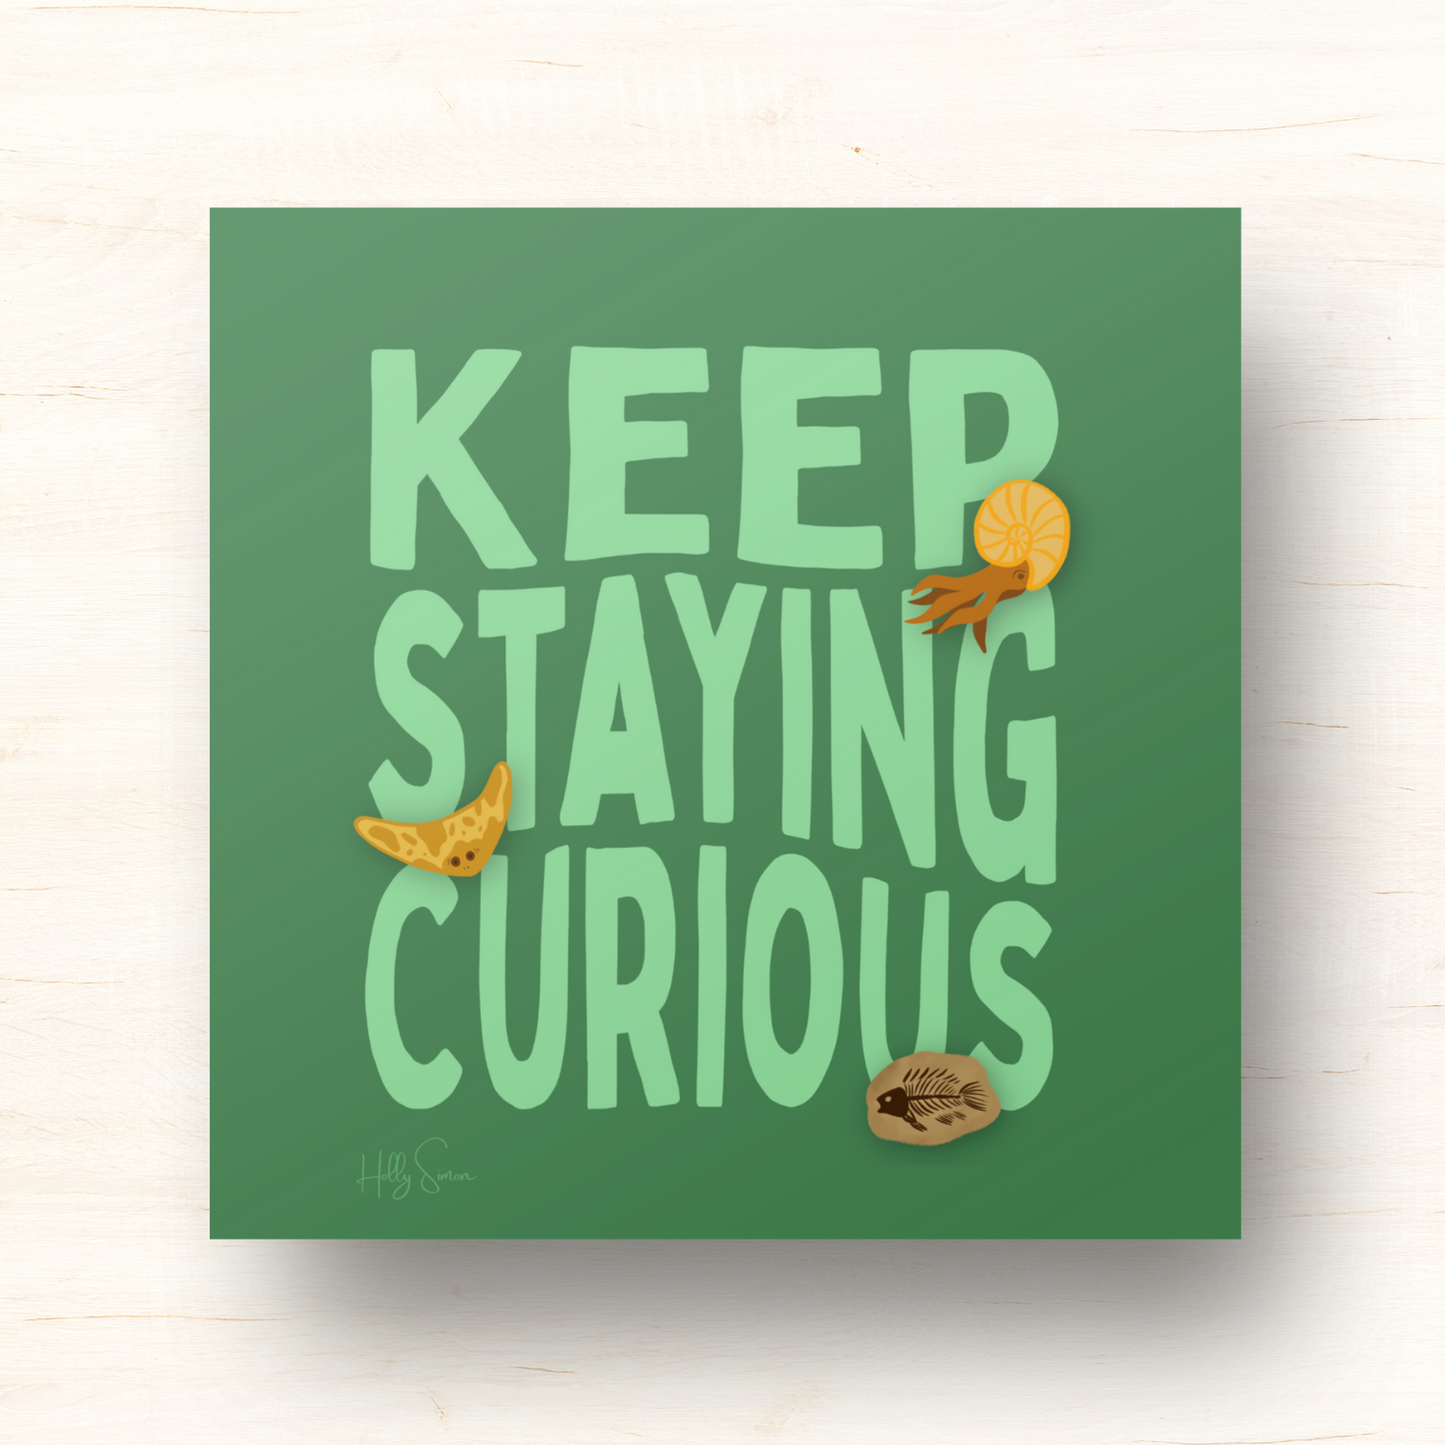 Keep Staying Curious 8"x8" Art Print